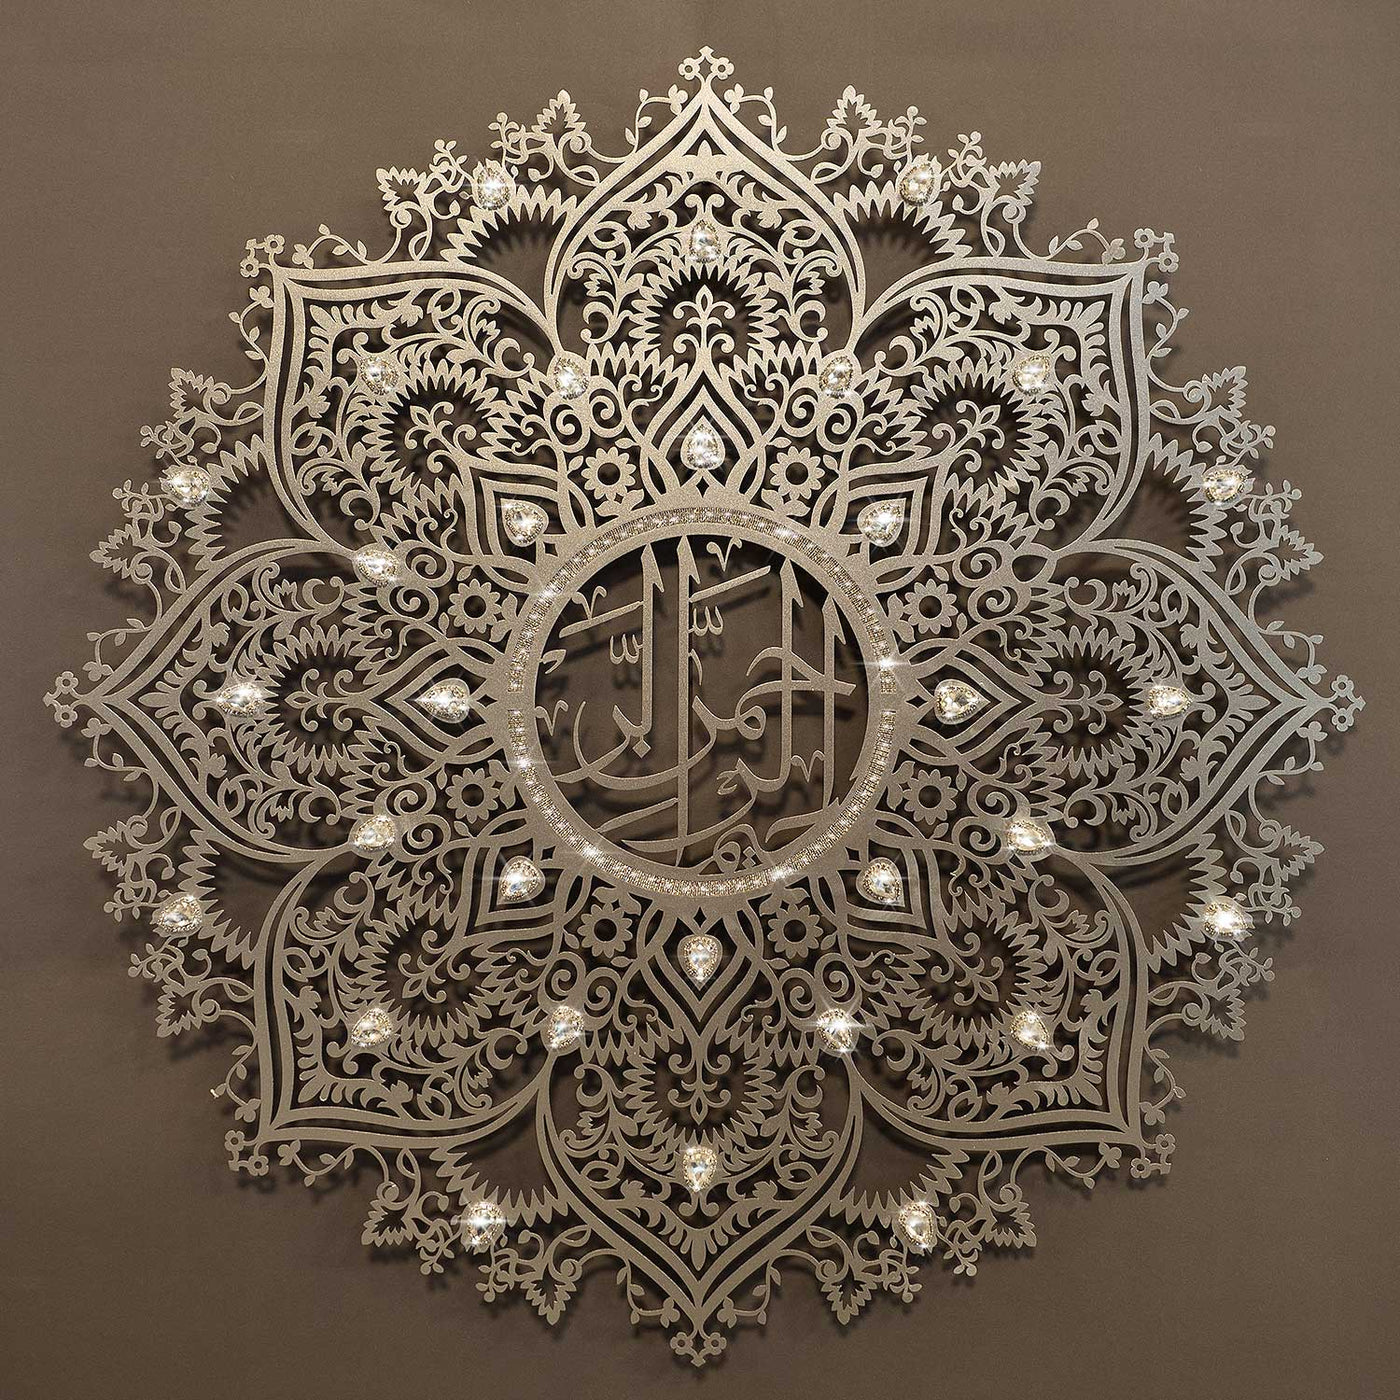 Ar Rahman Ar Raheem with Crystal Drop Stones Metal Islamic Wall Art - WAM149